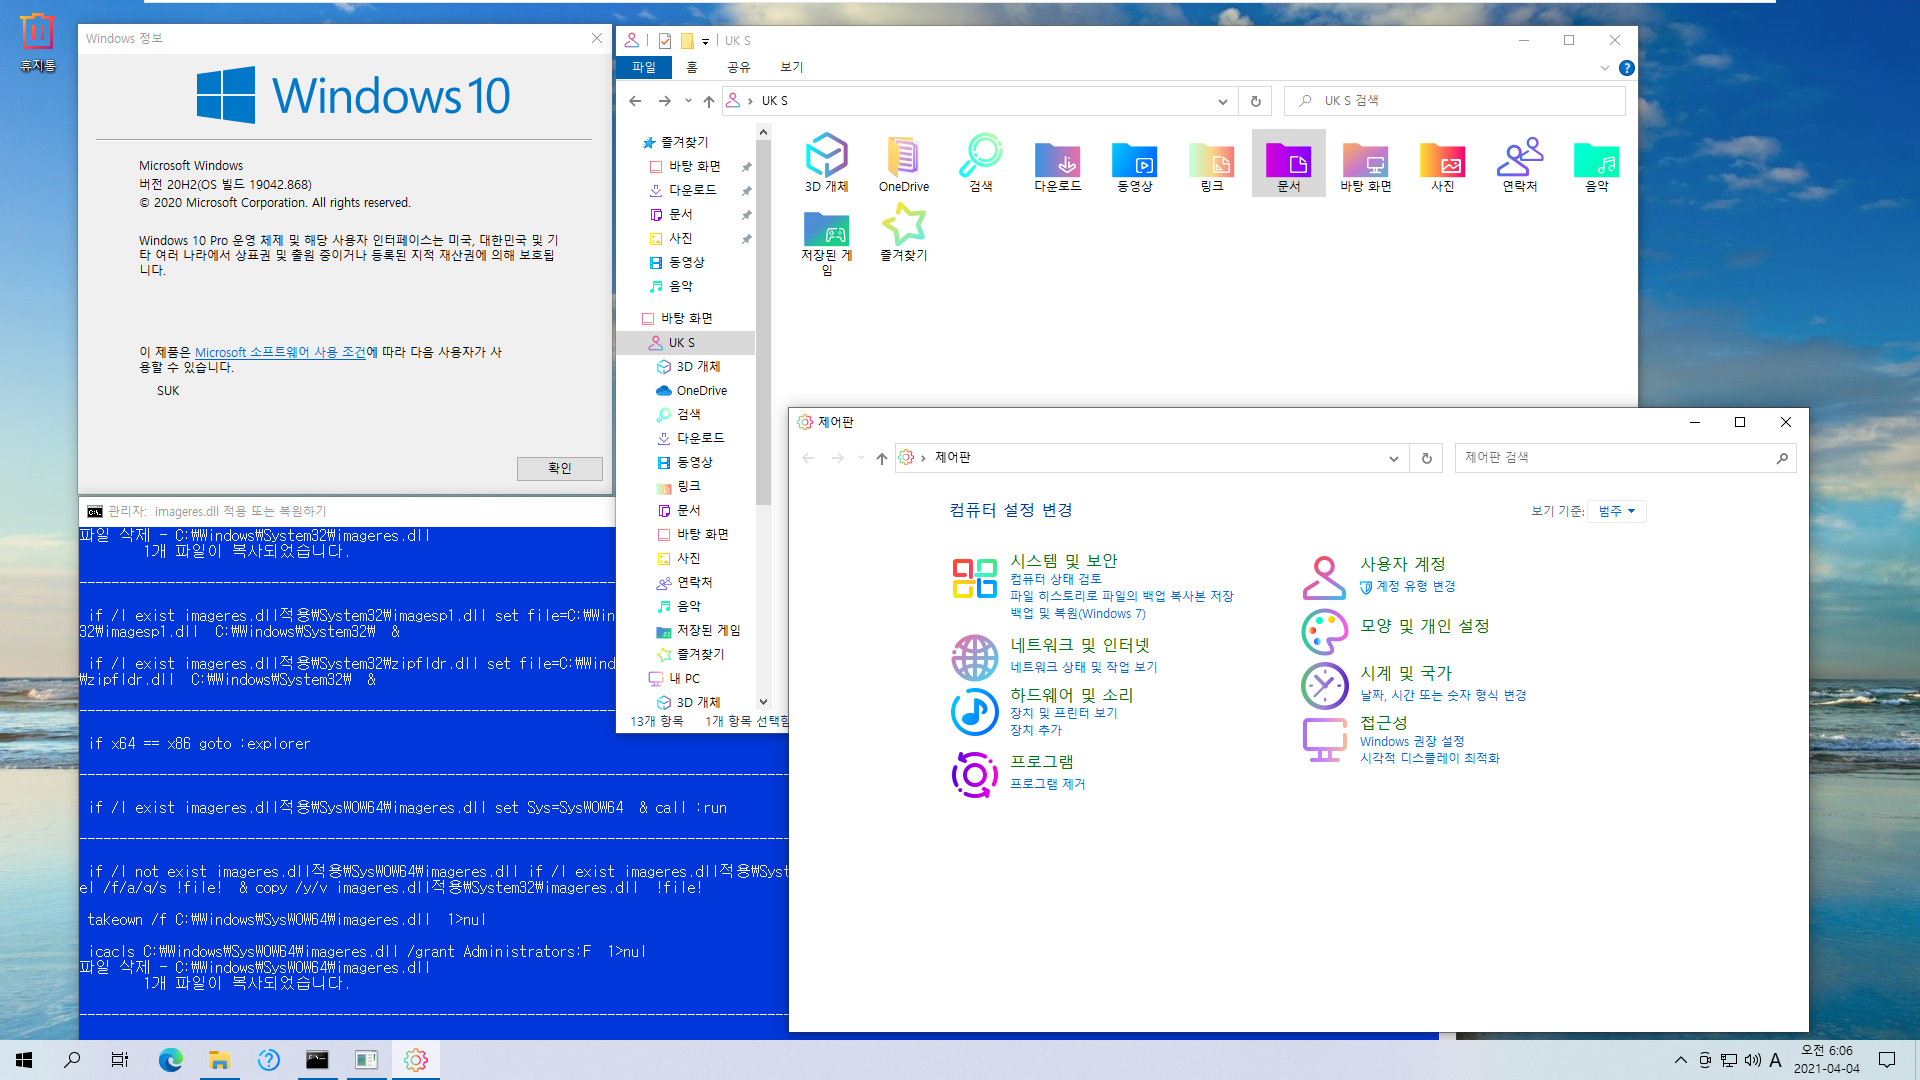 imageres.dll 윈도우 10 버전 1809용 파일이고 윈도우 7 라이브러리 안에 폴더 아이콘들이 정상 표시되기 때문에 윈도우 7 종료와 부팅 배경화면만 정상 표시되도록 7 원본 imageres.dll을 합쳐서 테스트 2021-04-04_060600.jpg